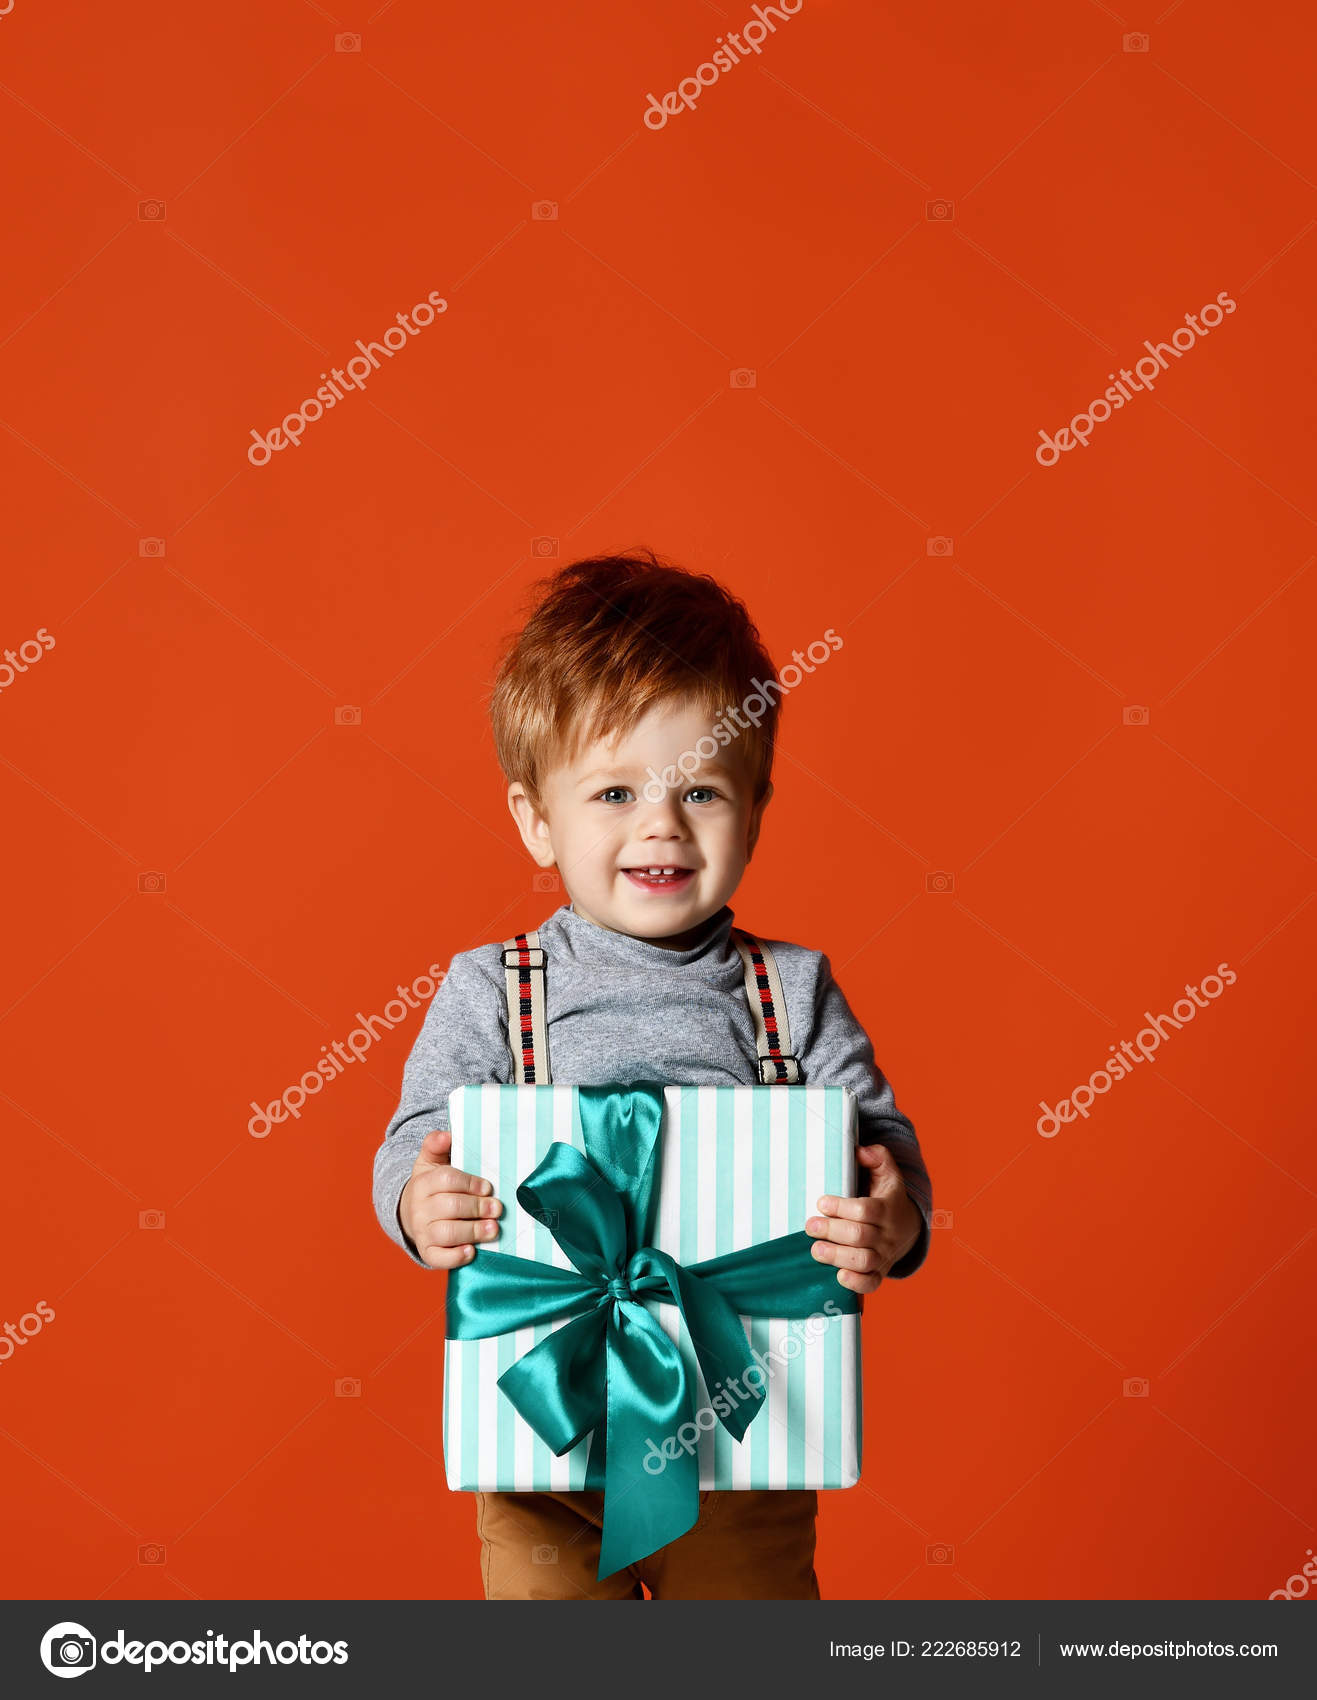   1 Décembre.Bientôt noël . Depositphotos_222685912-stock-photo-happy-kid-with-big-gift